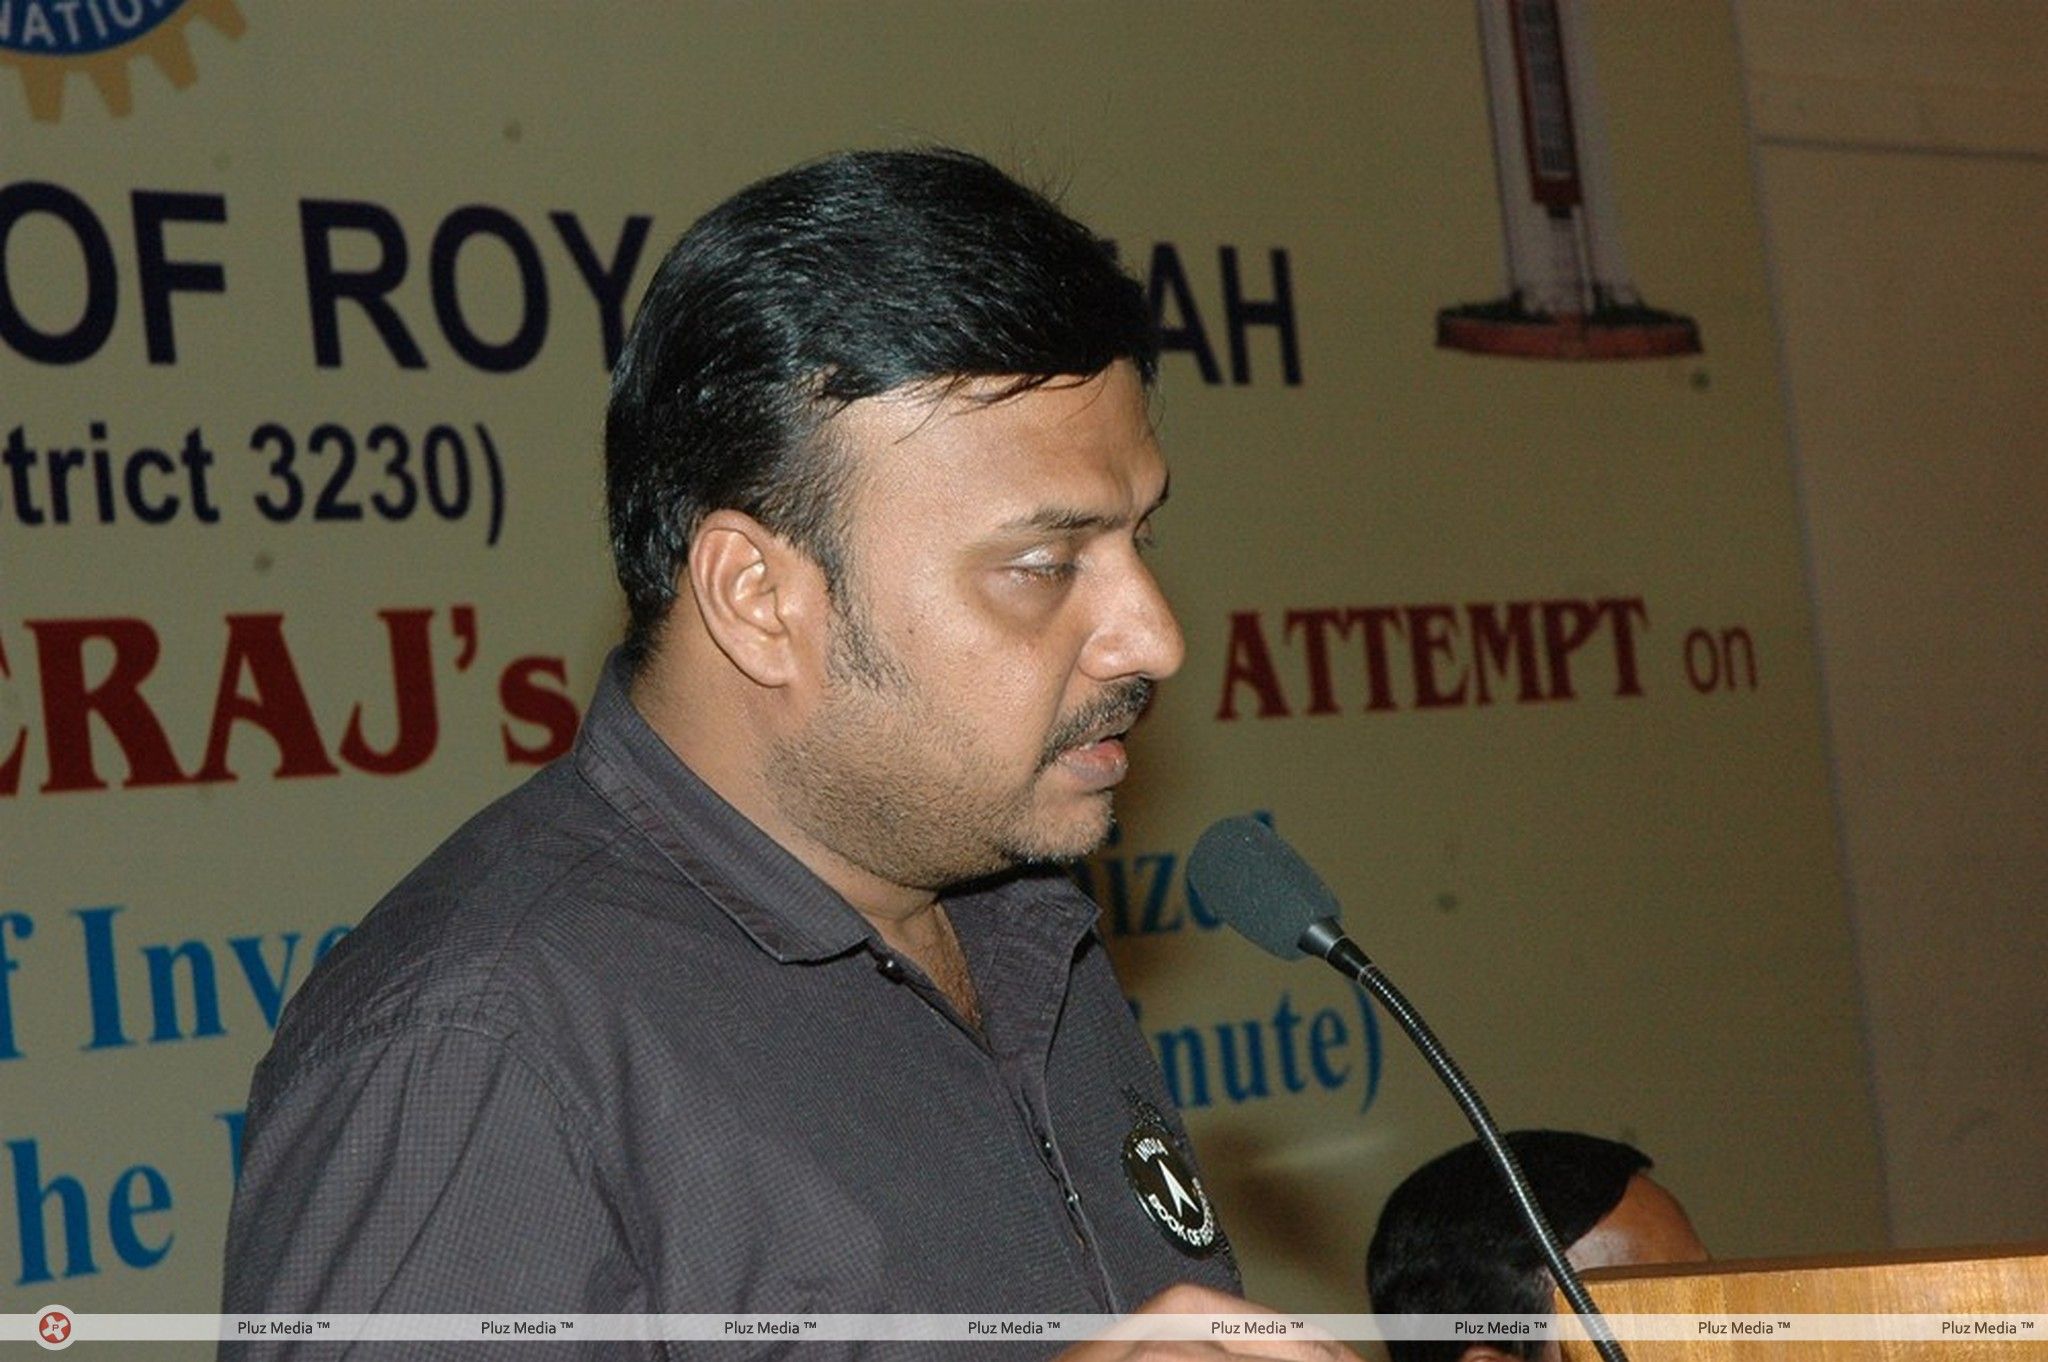 Prabhu Solomon - Prabhu Solomon at Rotary Club of Royapettah Event Stills | Picture 378352